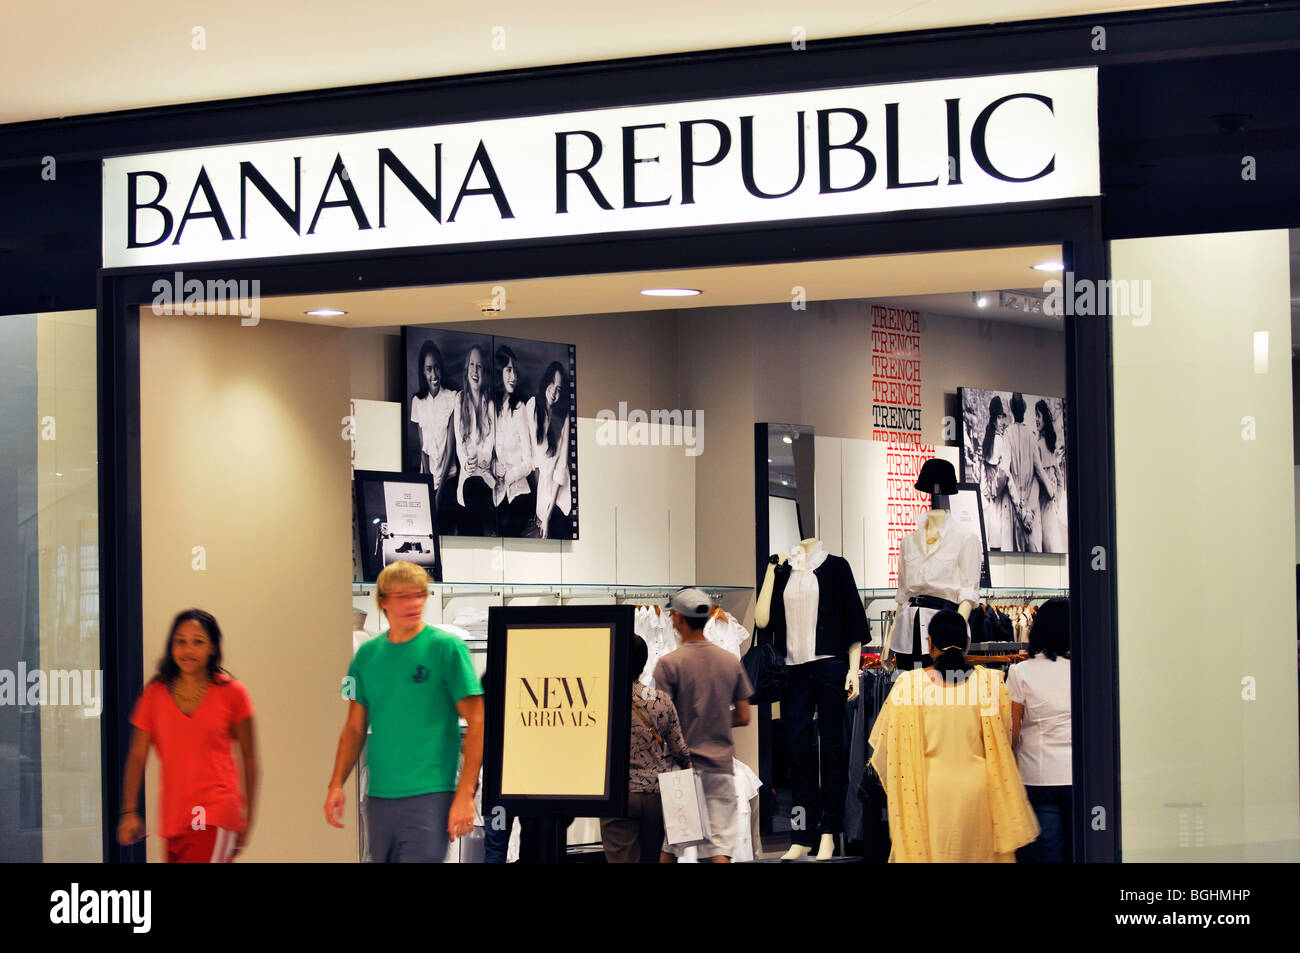 Banana Republic store Stock Photo - Alamy